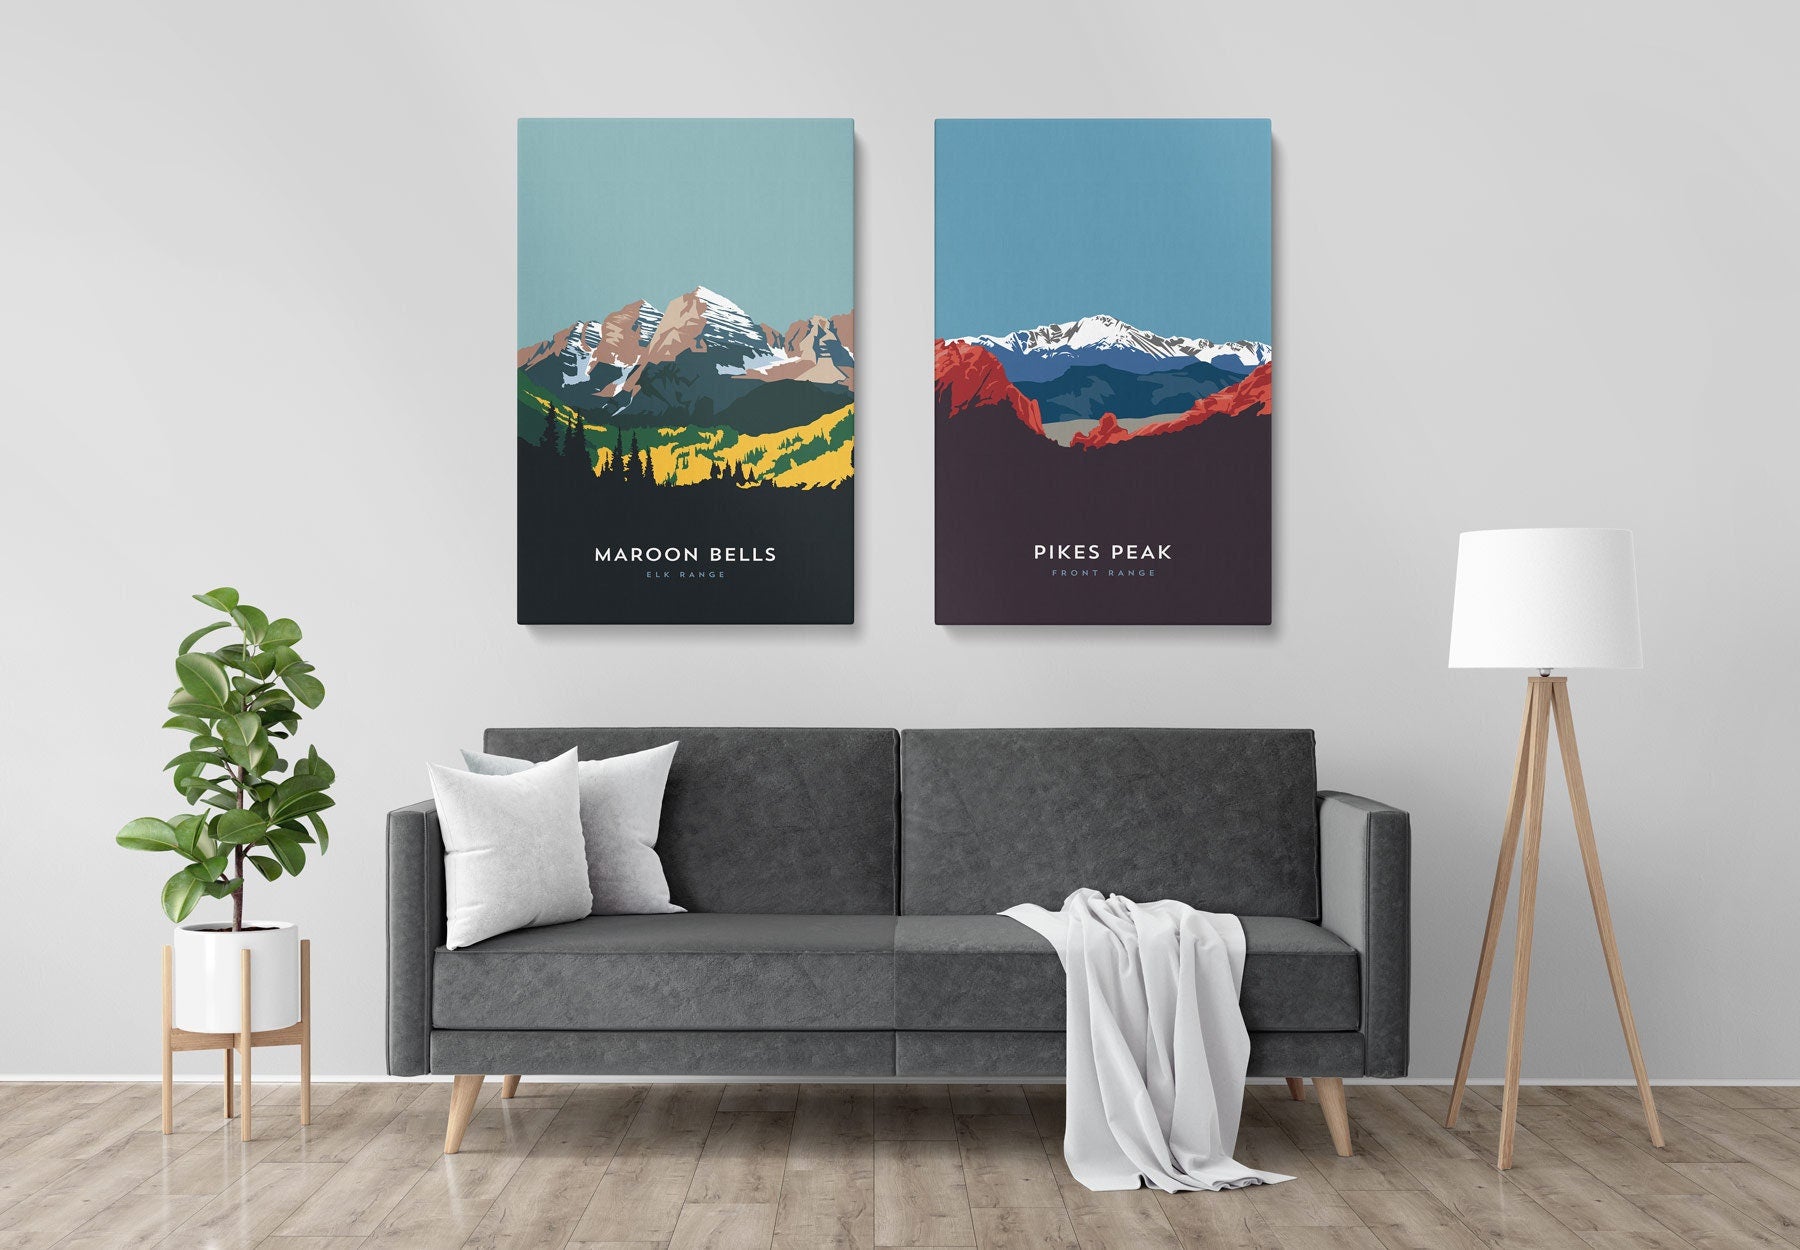 Blanca Peak Colorado 14er Canvas Print